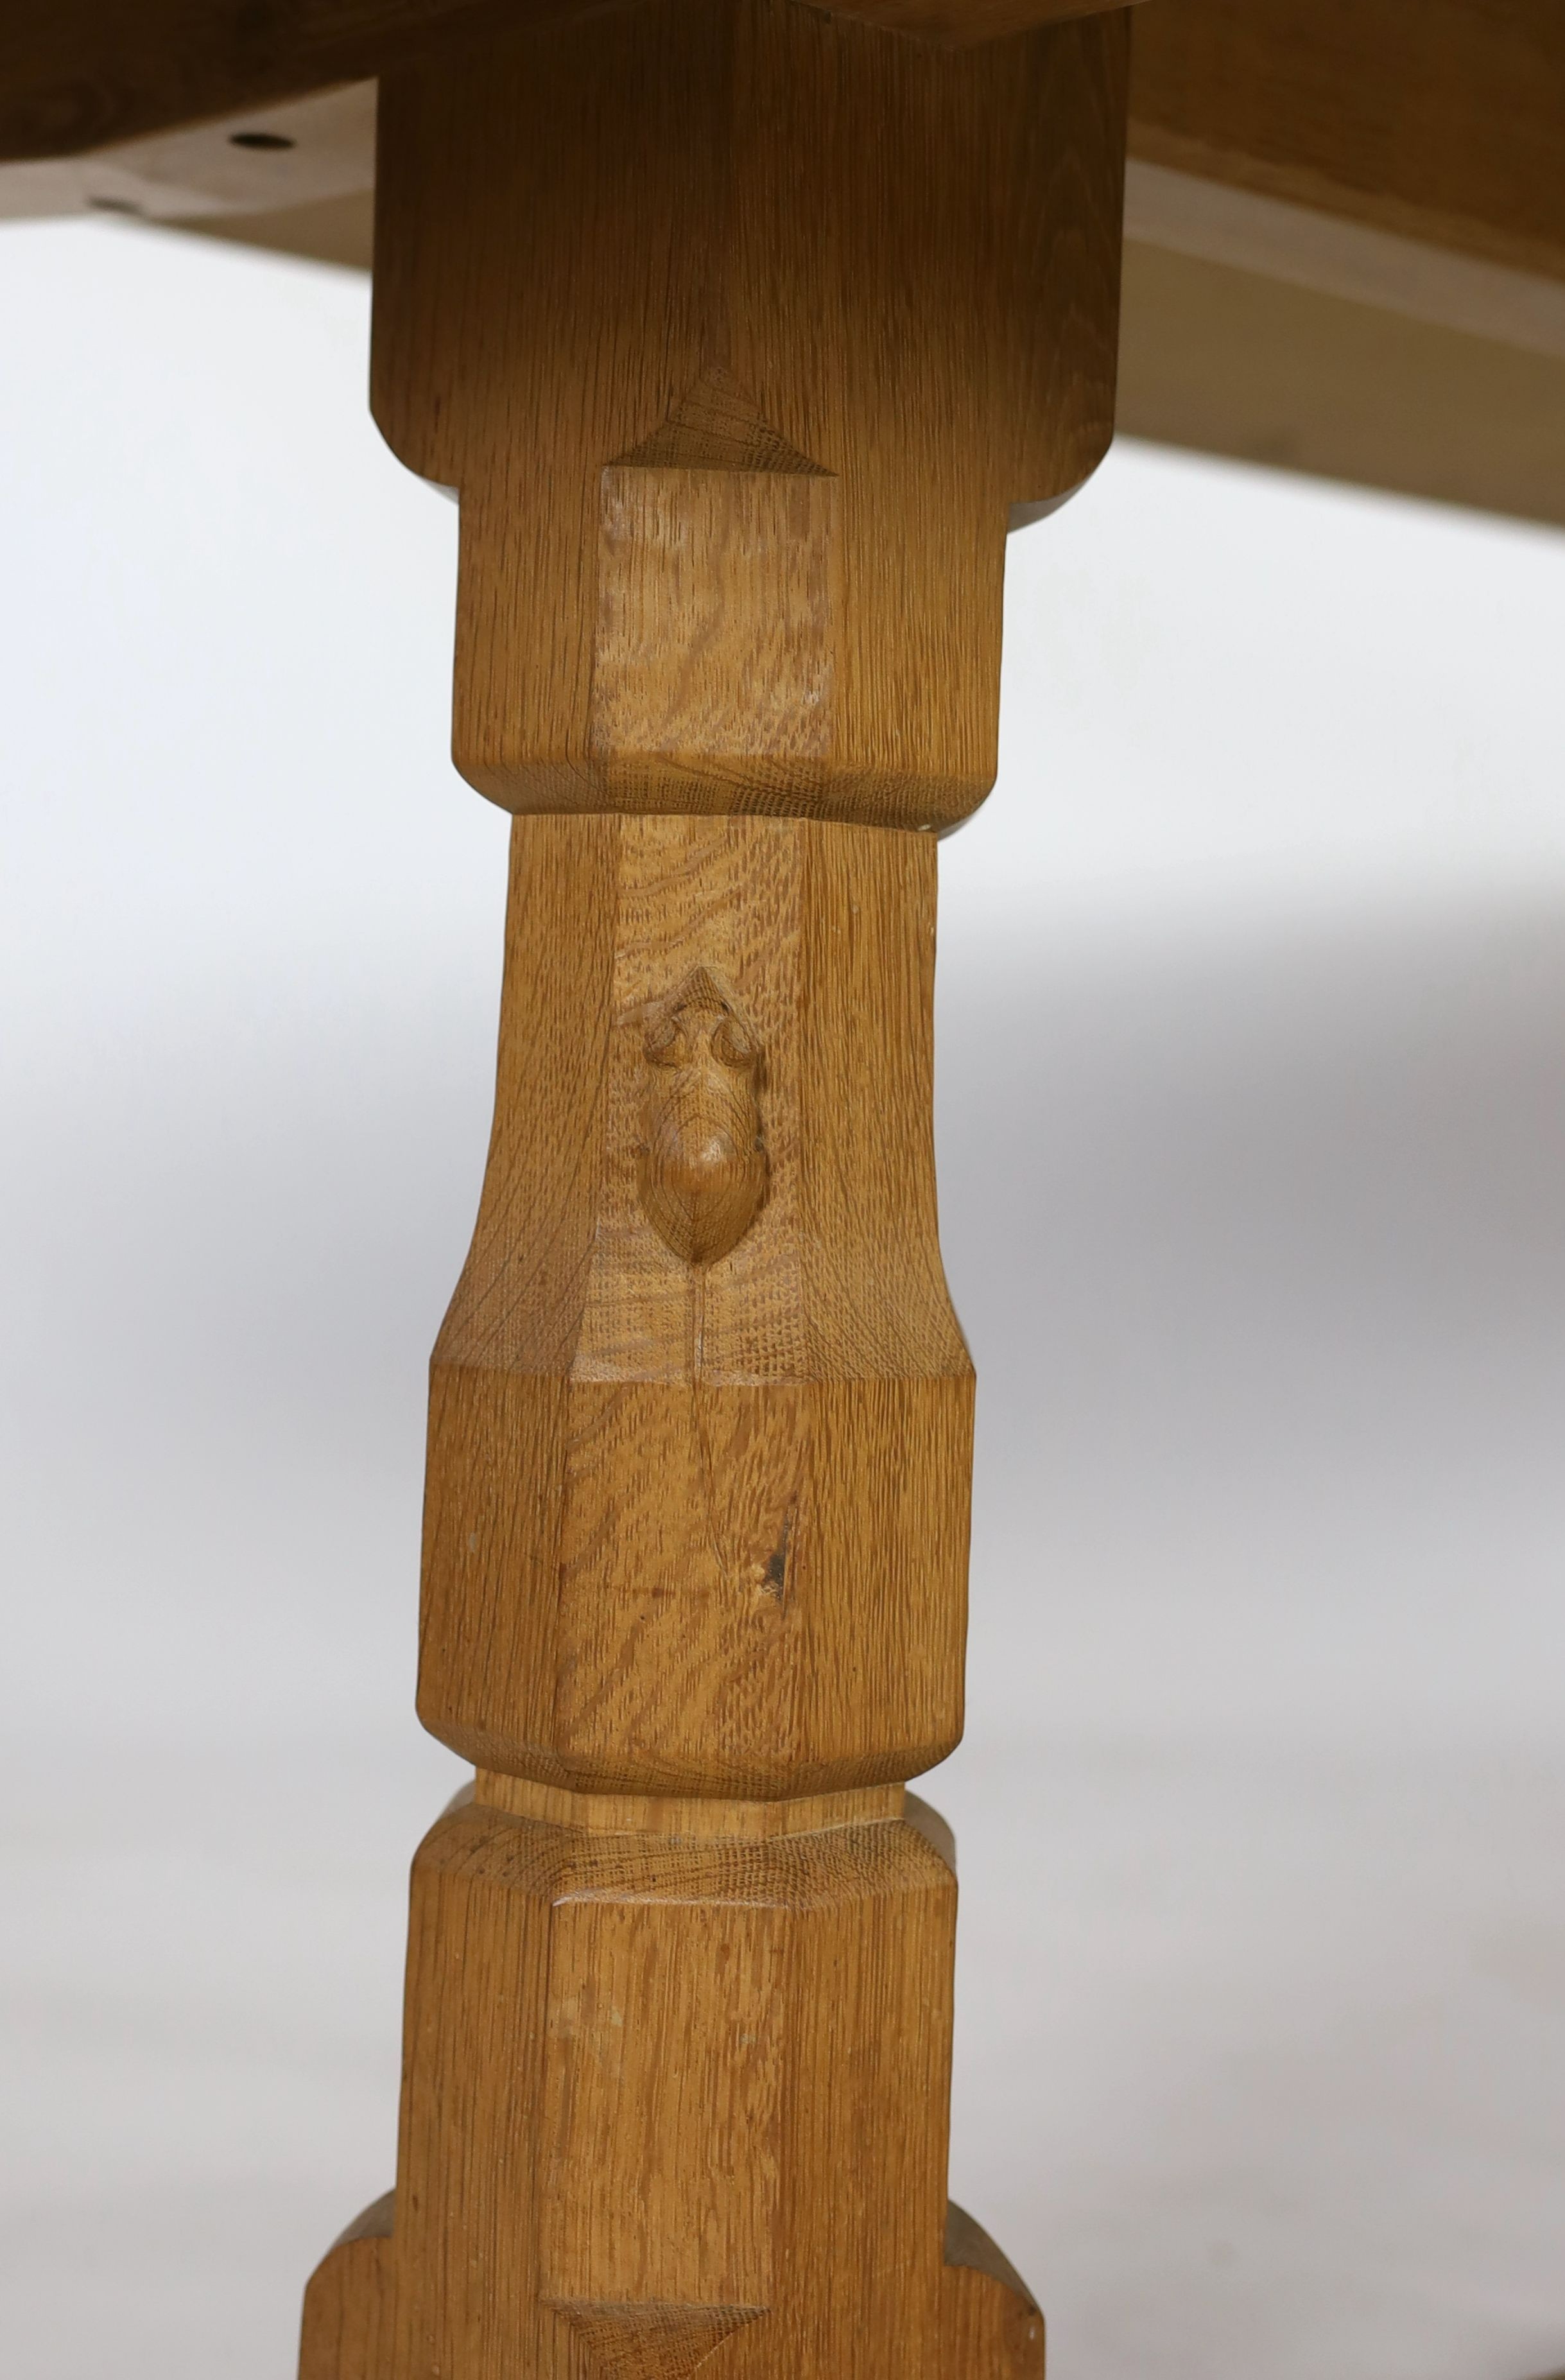 An oak 'Mouseman' refectory table by Robert Thompson of Kilburn 275 x 98cm, H.73cm